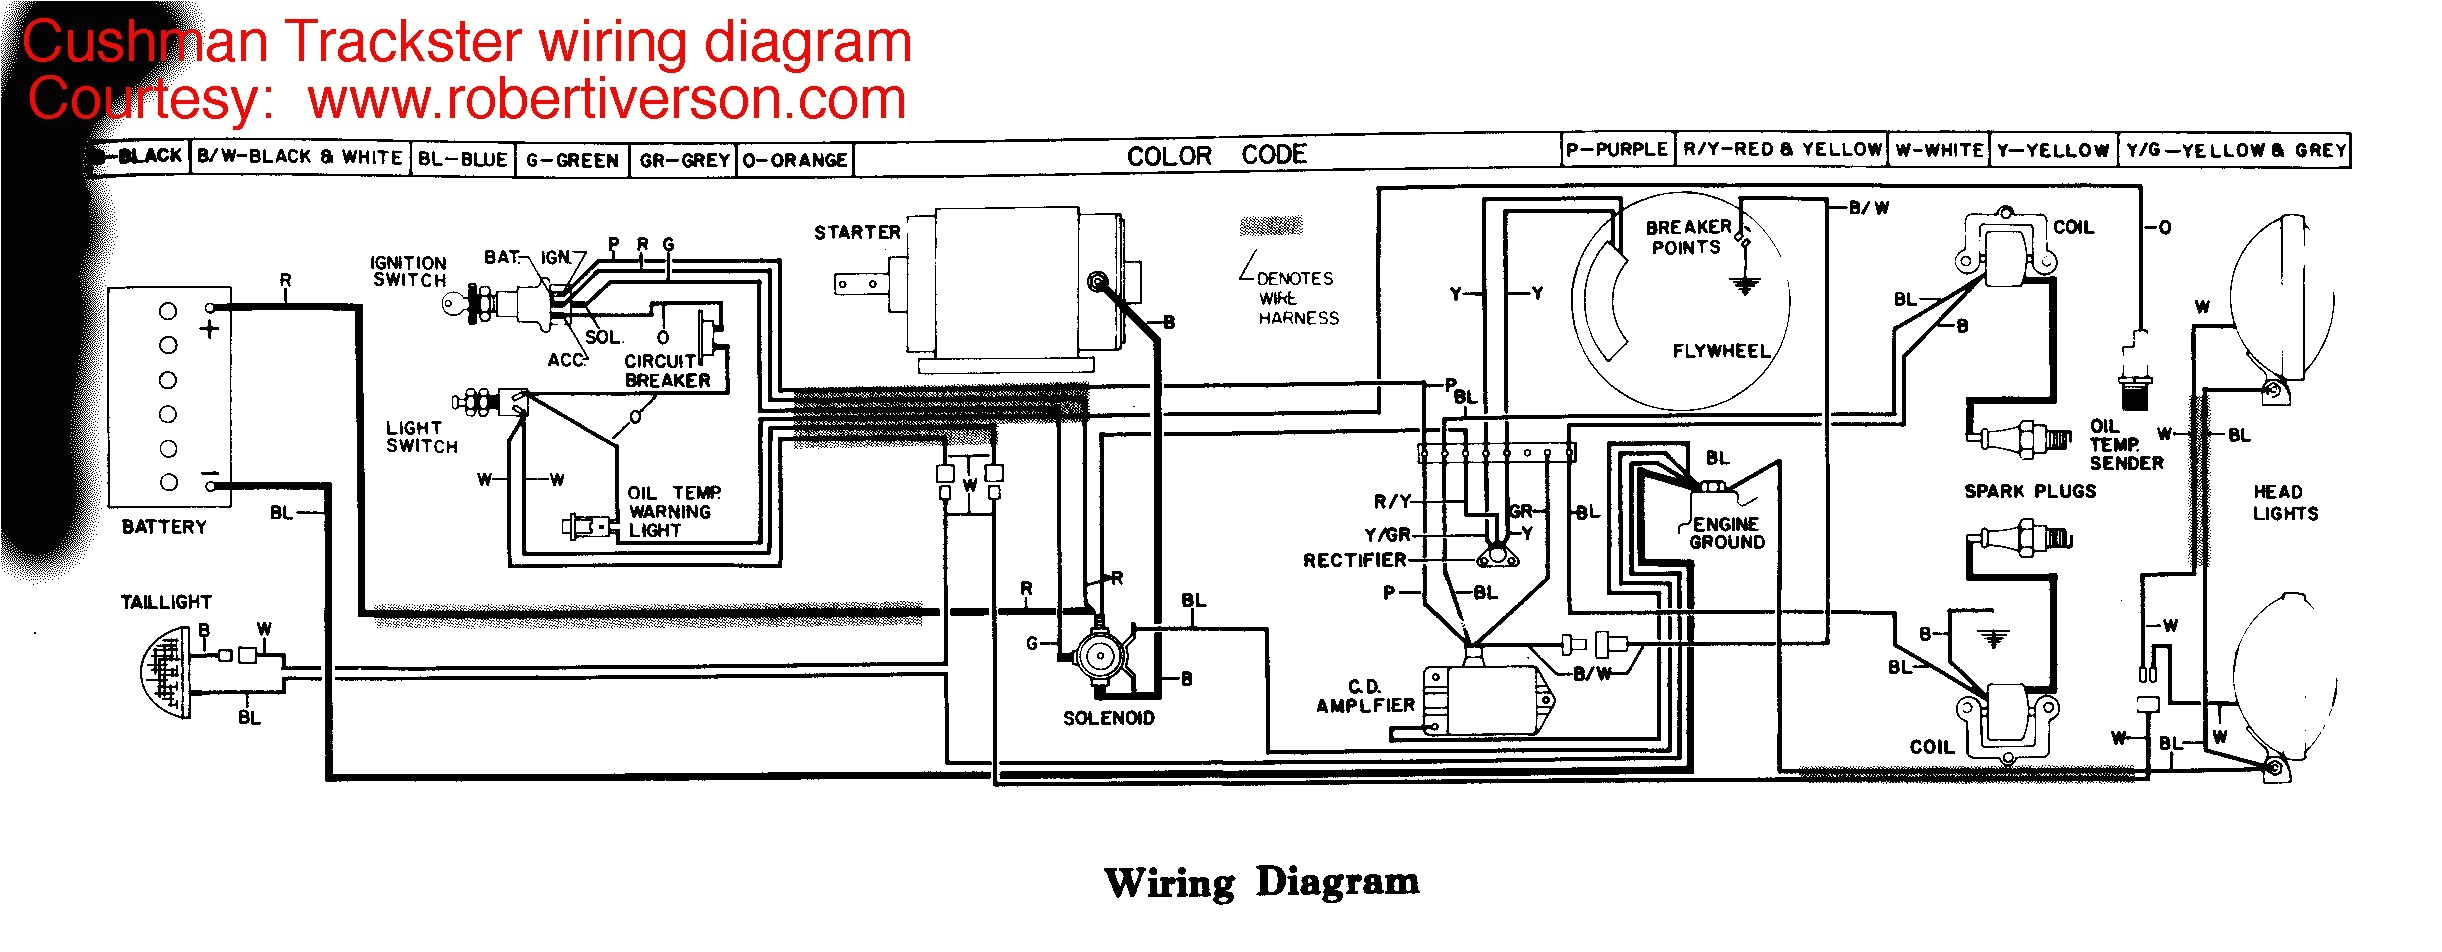 cushman truckster gas wiring diagram wiring diagram review cushman truckster wiring diagram wiring diagram meta cushman